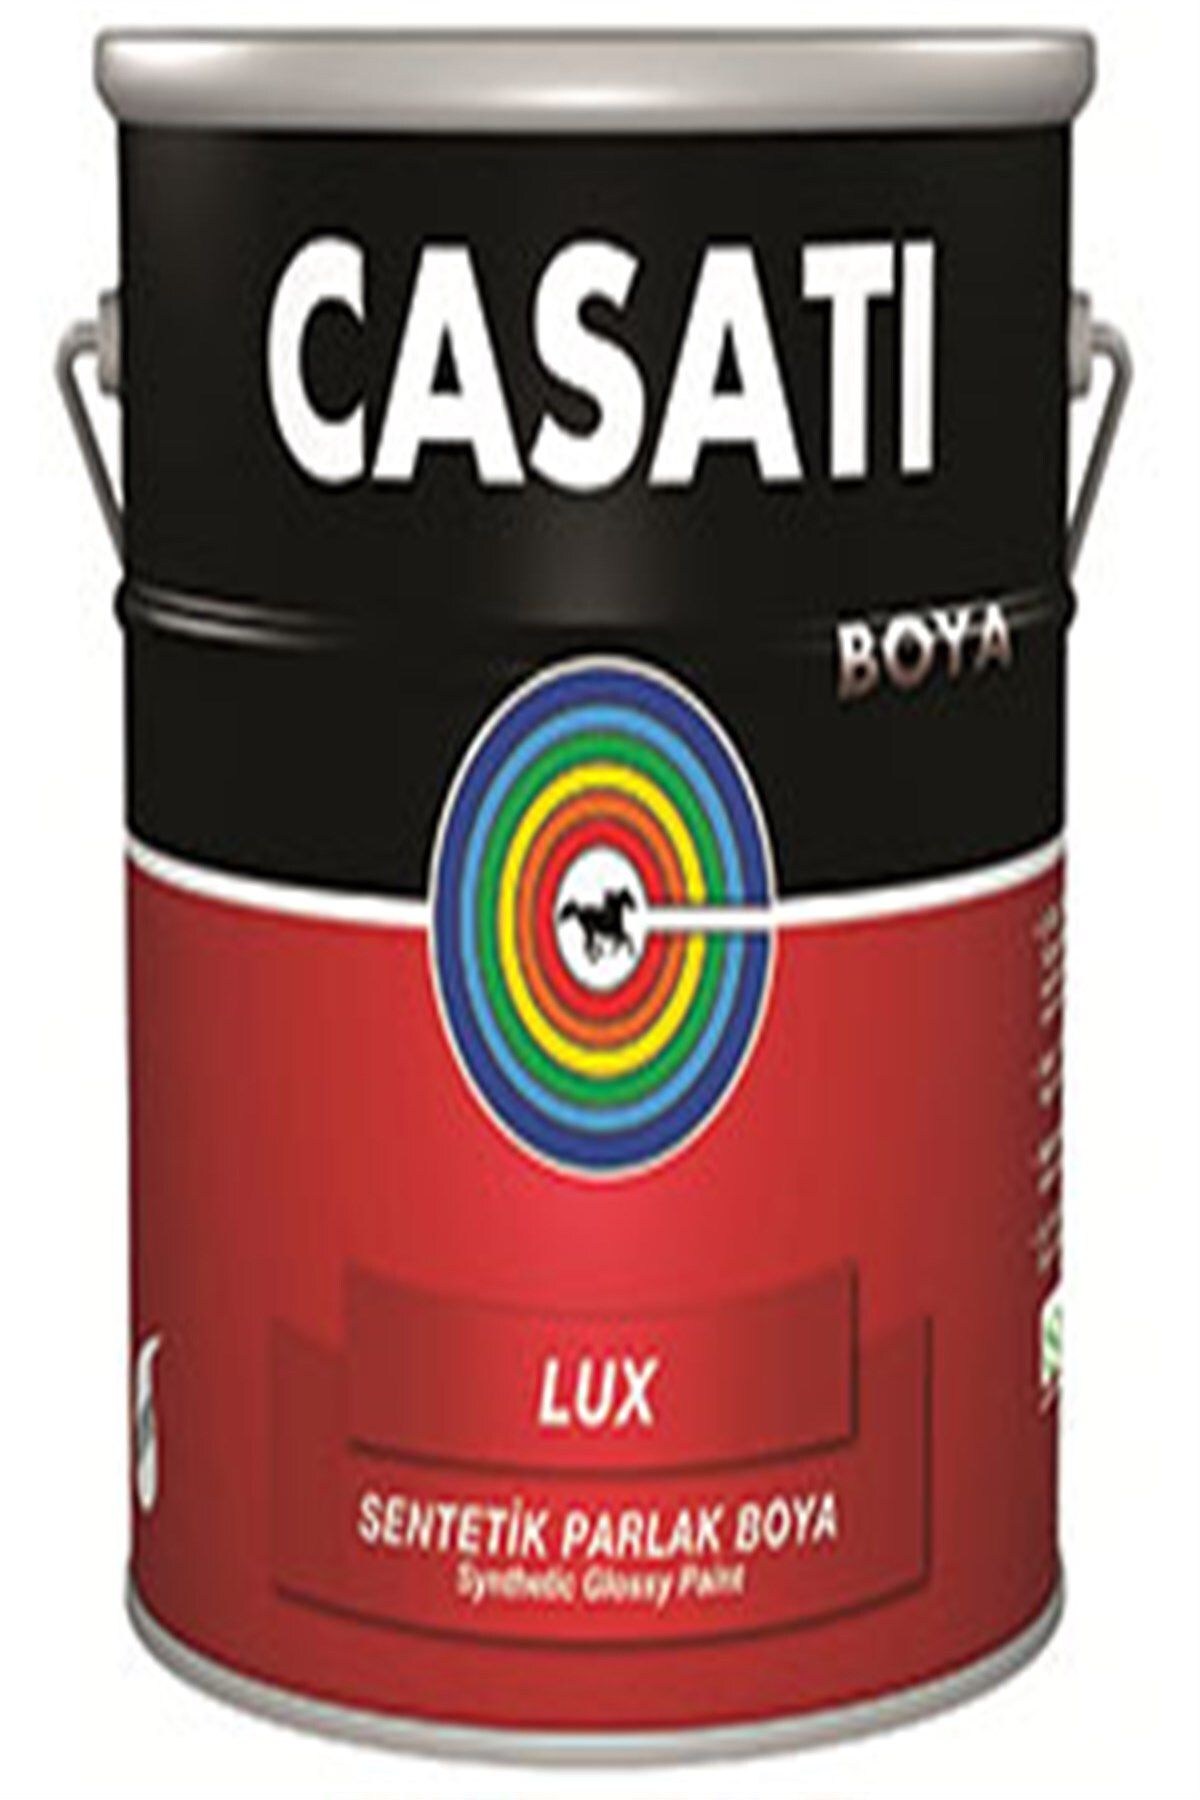 Casati Lüx Sentetik Parlak Boya 7.5 Litre Tüm Renkler Mevcut